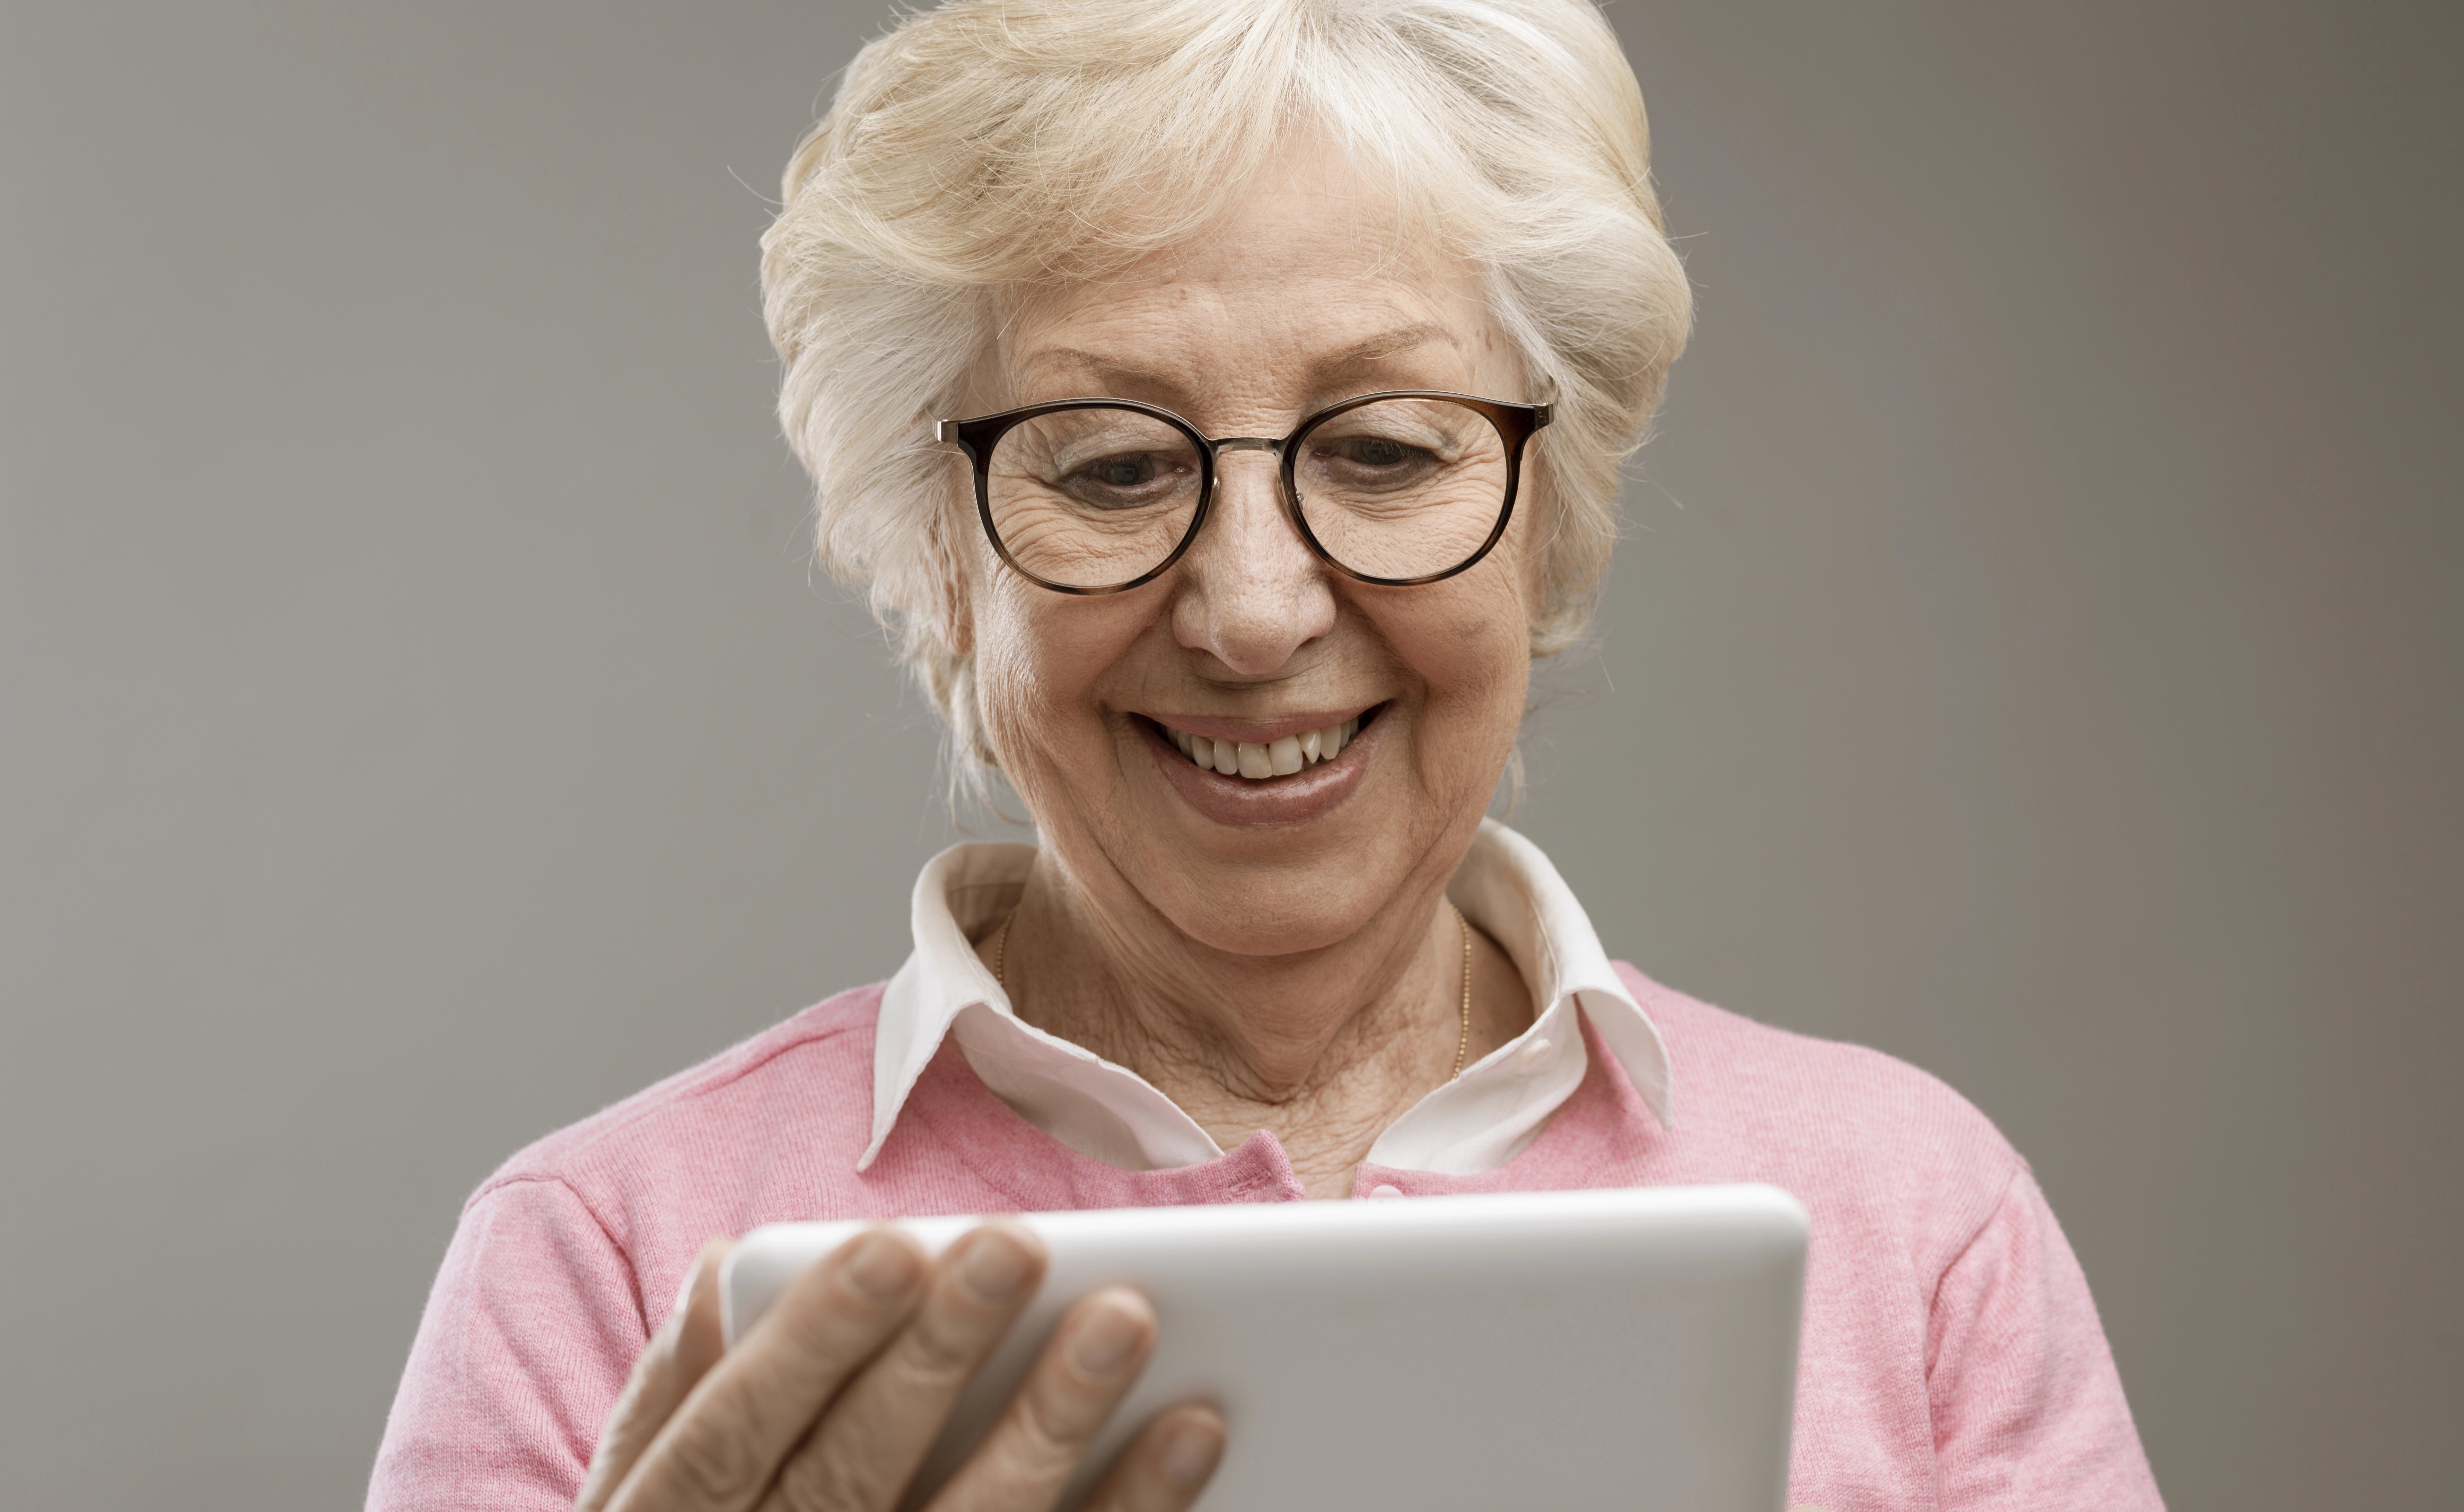 Smiling senior woman looking at tablet